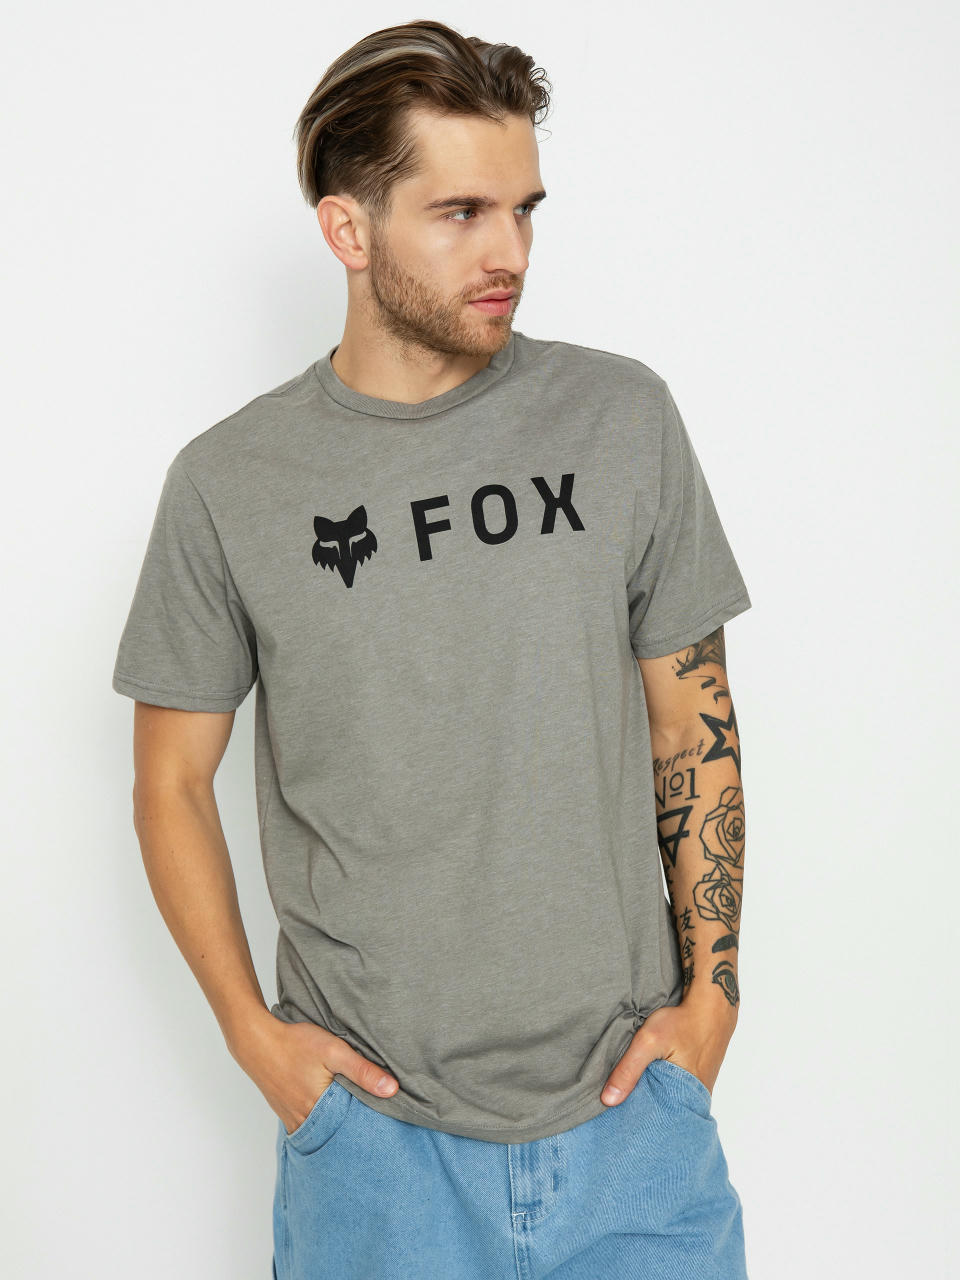 Fox Absolute T-shirt (heather/graphite)